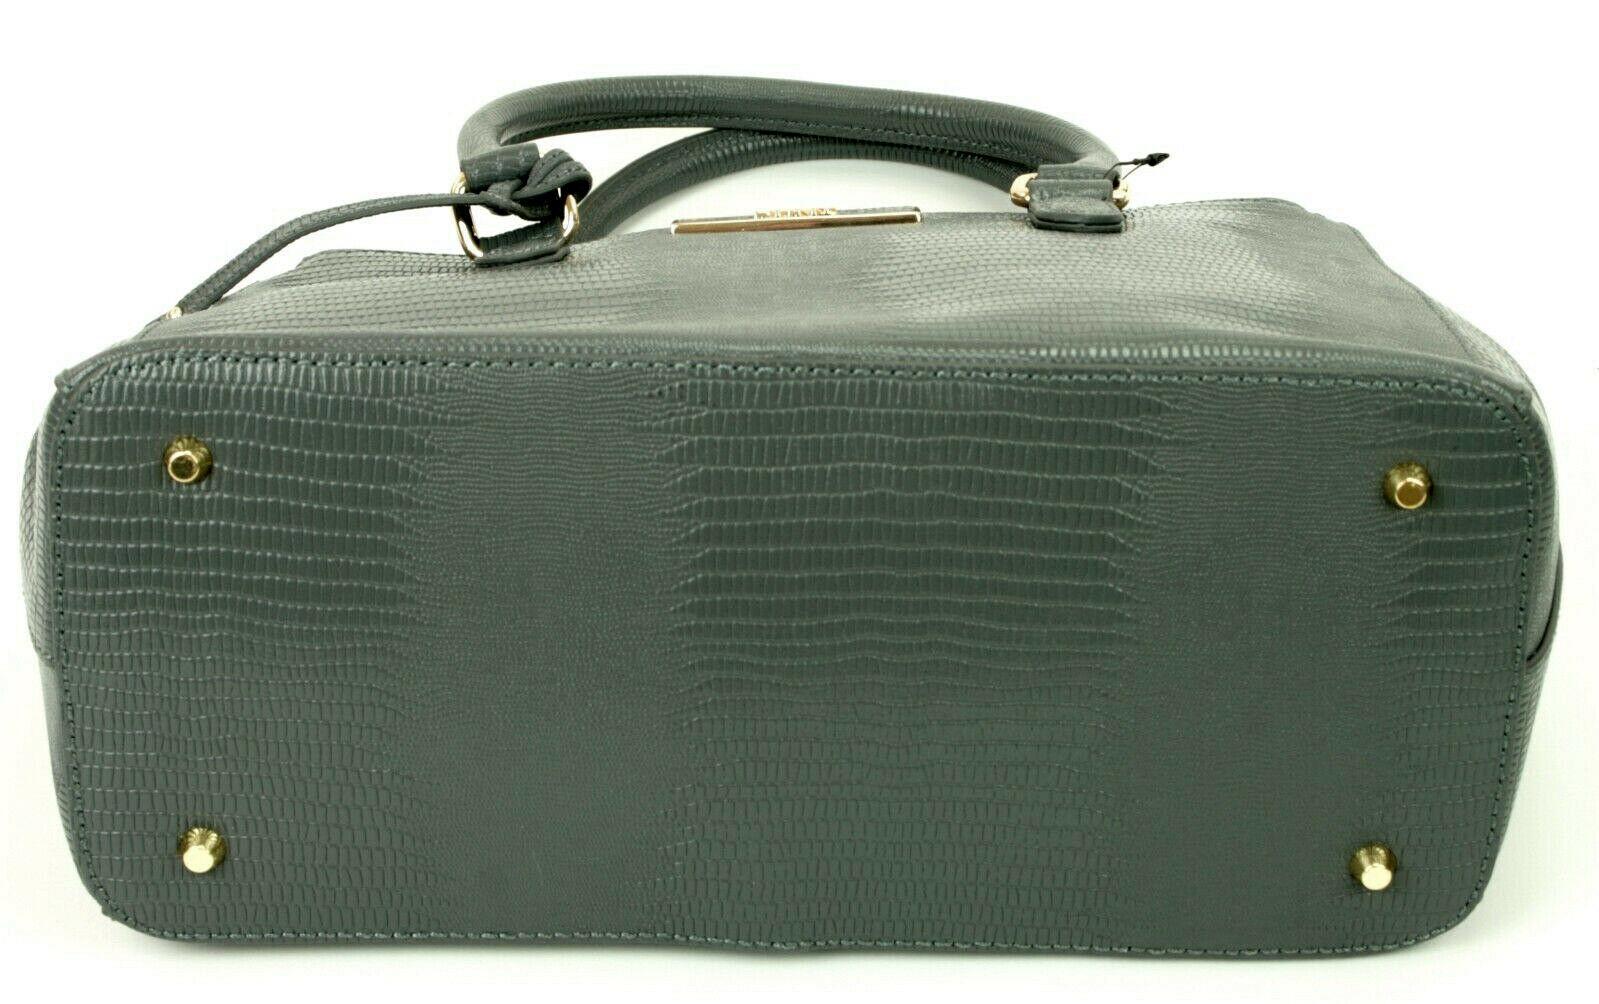 DKNY Grey Handbag Lizard Print Leather Medium Satchel Top Handle